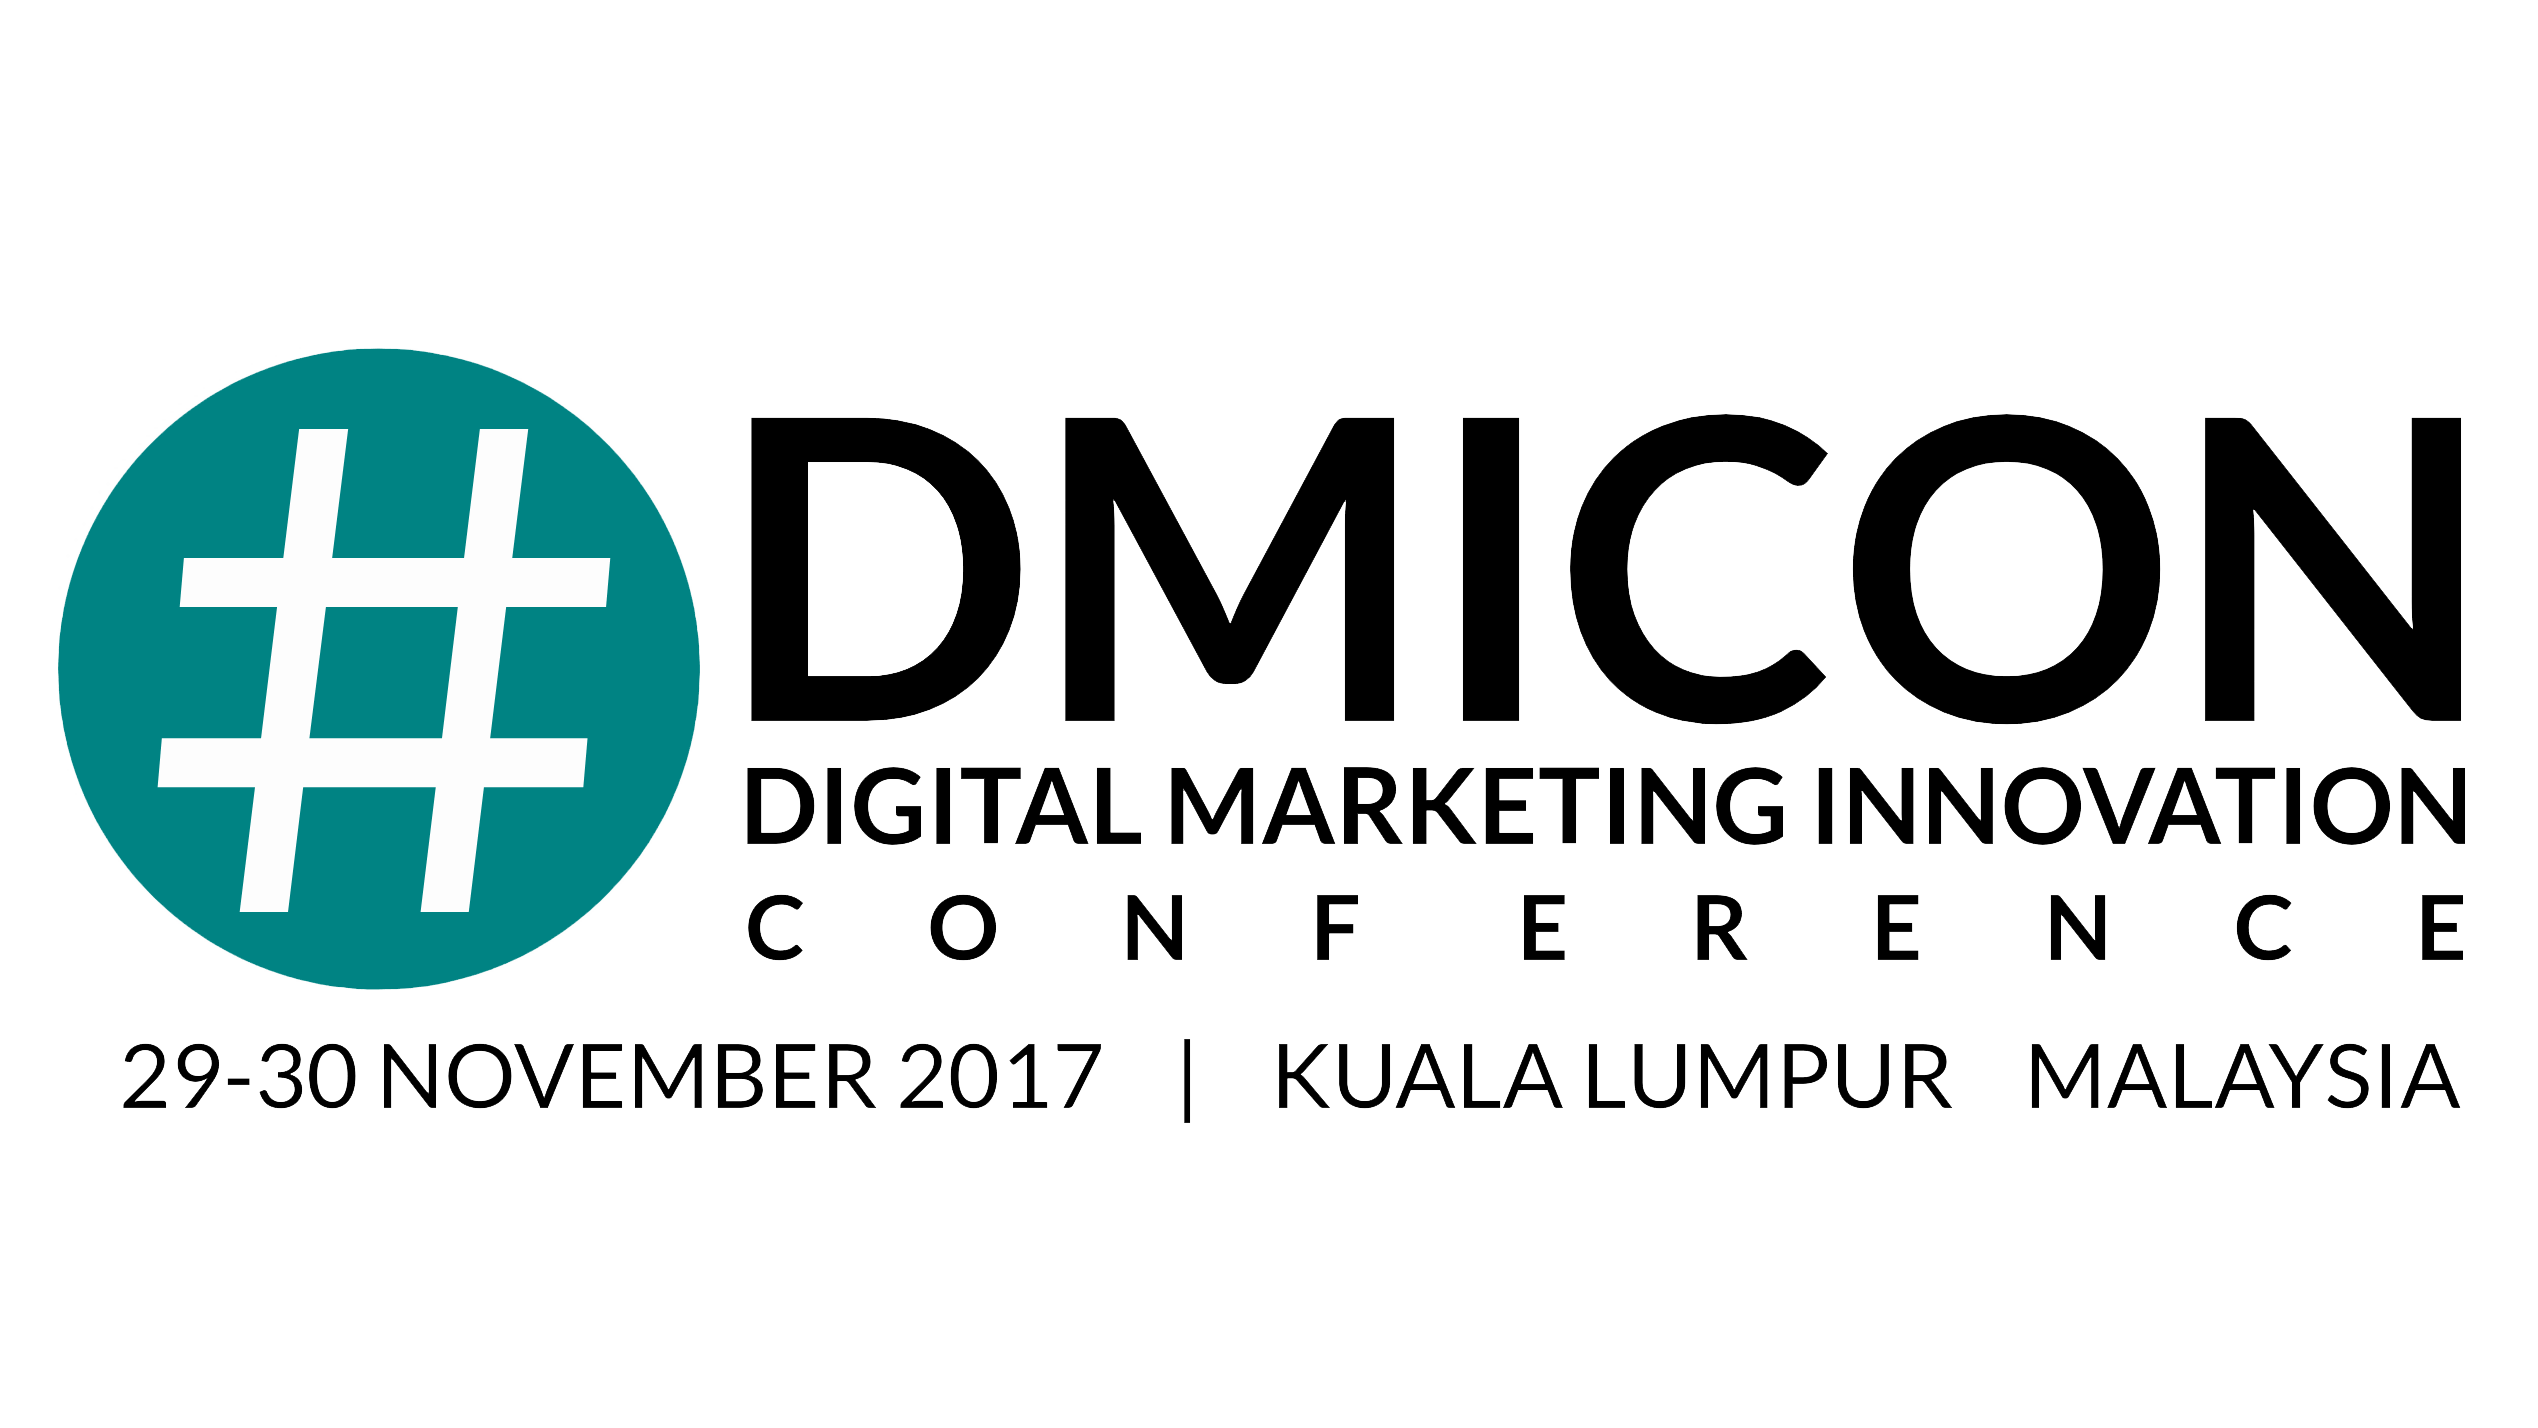 Digital Marketing Innovation Conference DMICON 2017 Logo